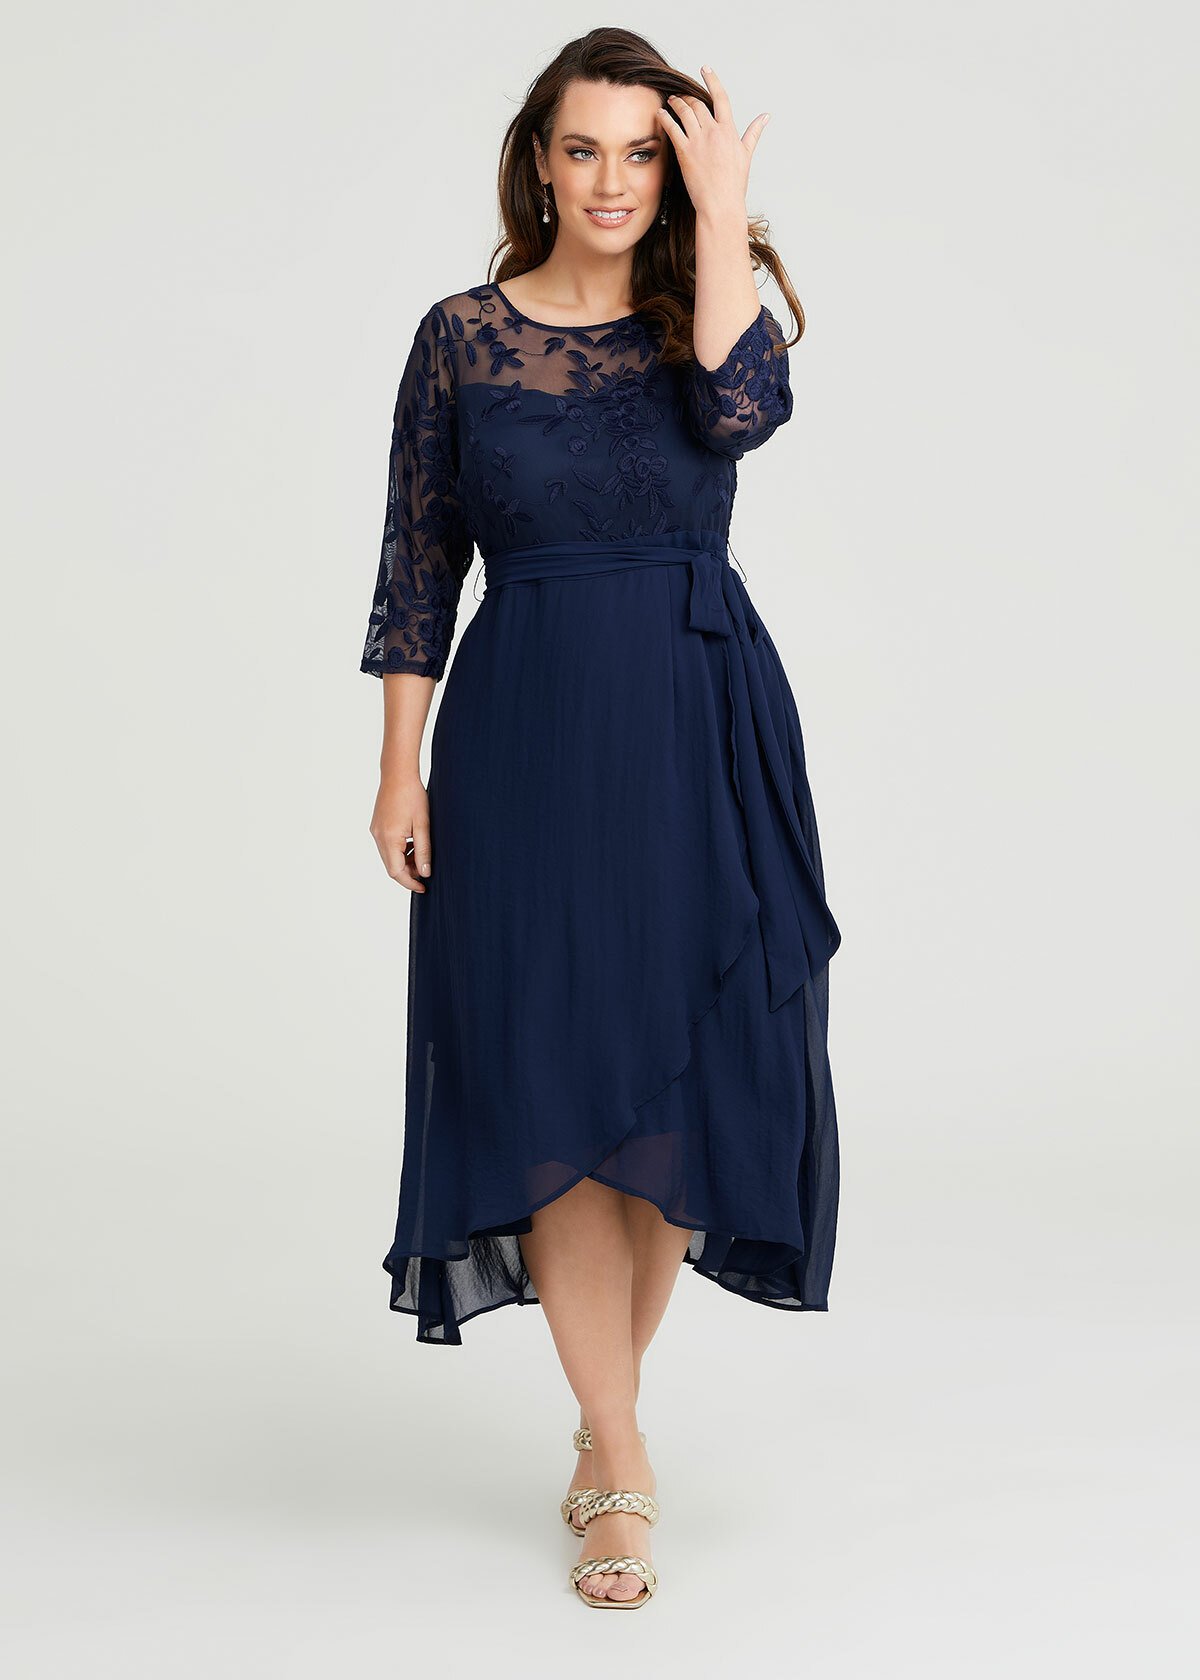 Shop Plus Size Ivy Lace & Chiffon Cocktail Dress in Blue | Sizes 12-30 ...